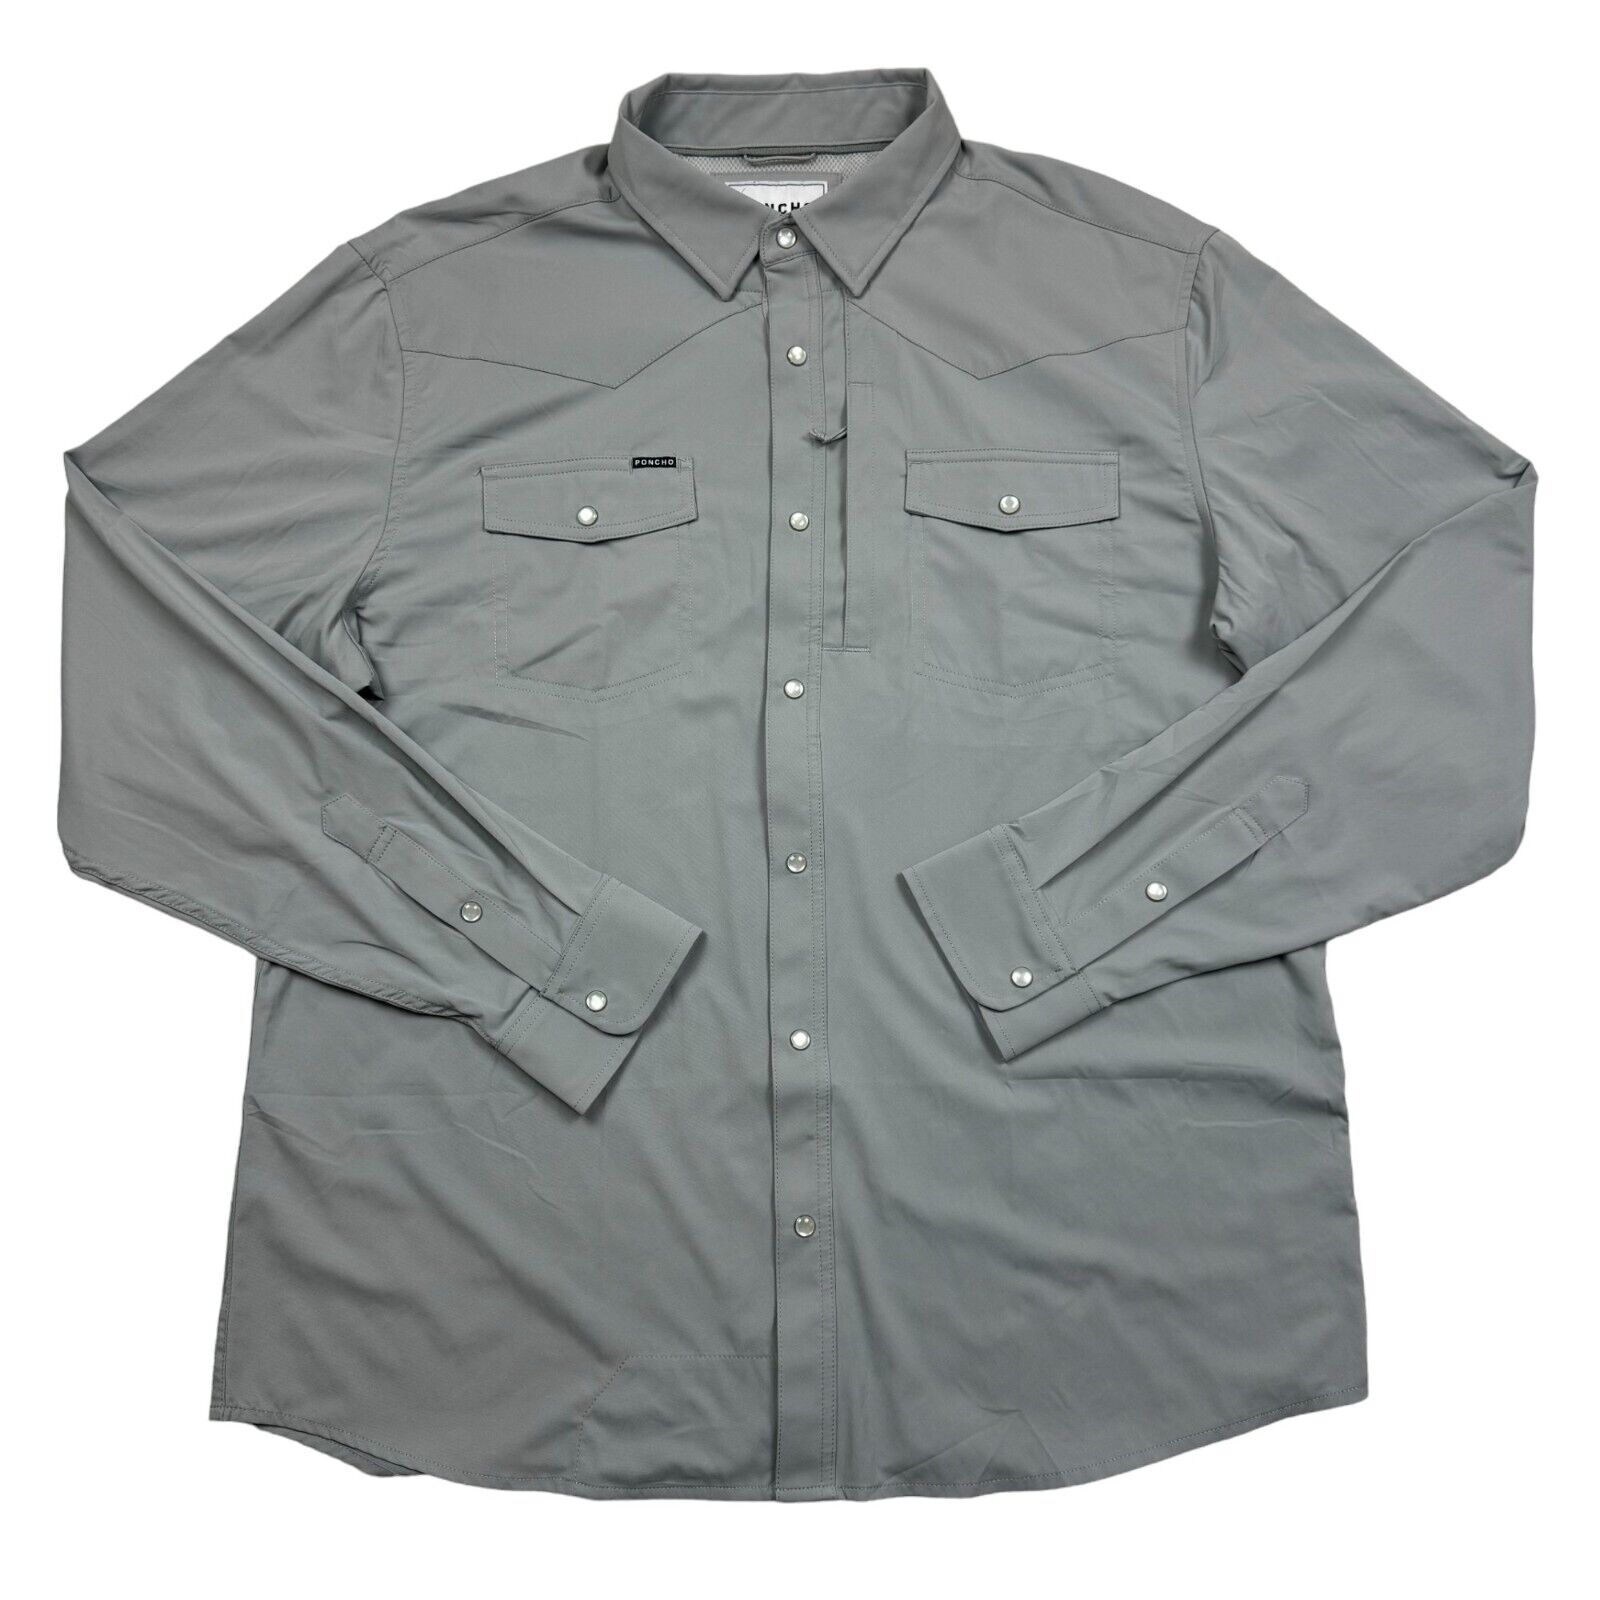 Poncho Long Sleeve Fishing Shirt Pearl Snap Gray Vented Caped Men's XL Slim Fit